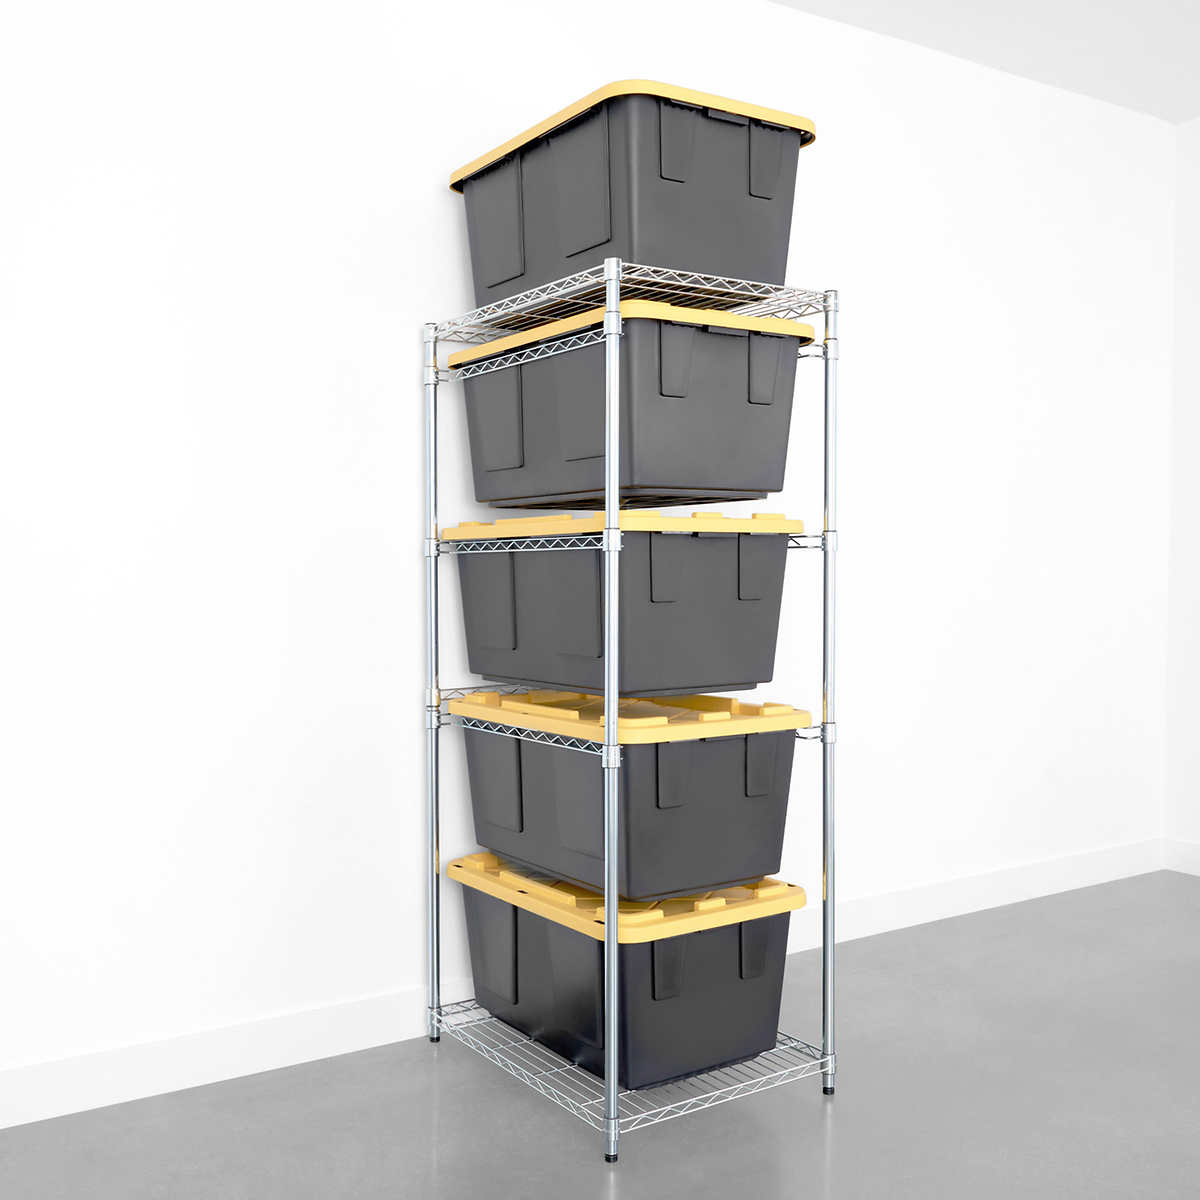 Saferacks Storage Bin Rack Costco, Storage Tote Shelving System